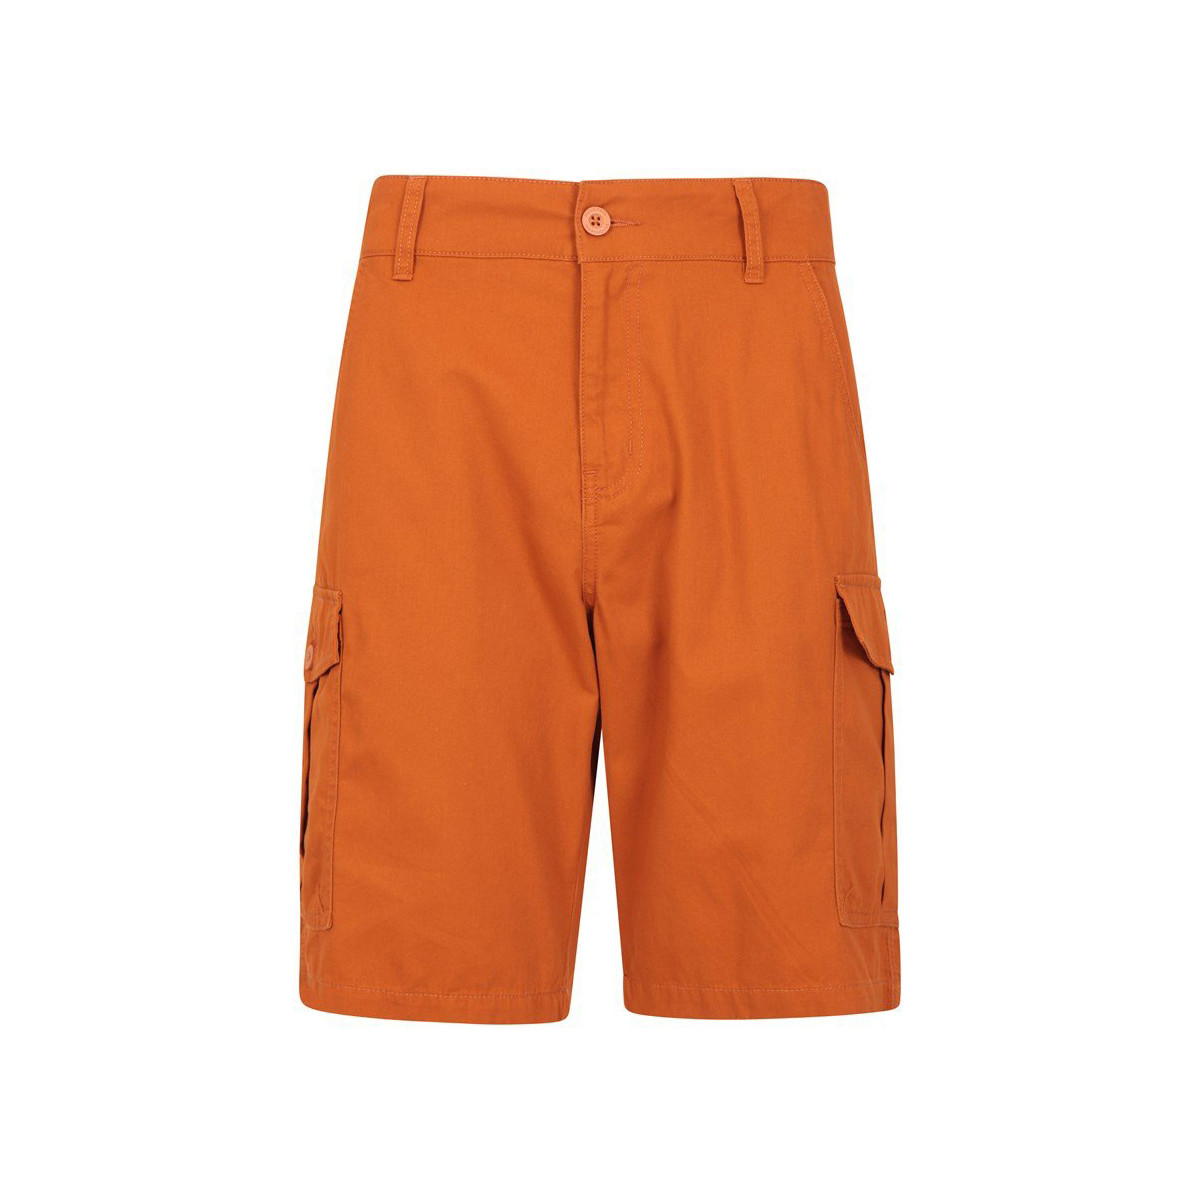 Abbigliamento Uomo Shorts / Bermuda Mountain Warehouse Lakeside Arancio